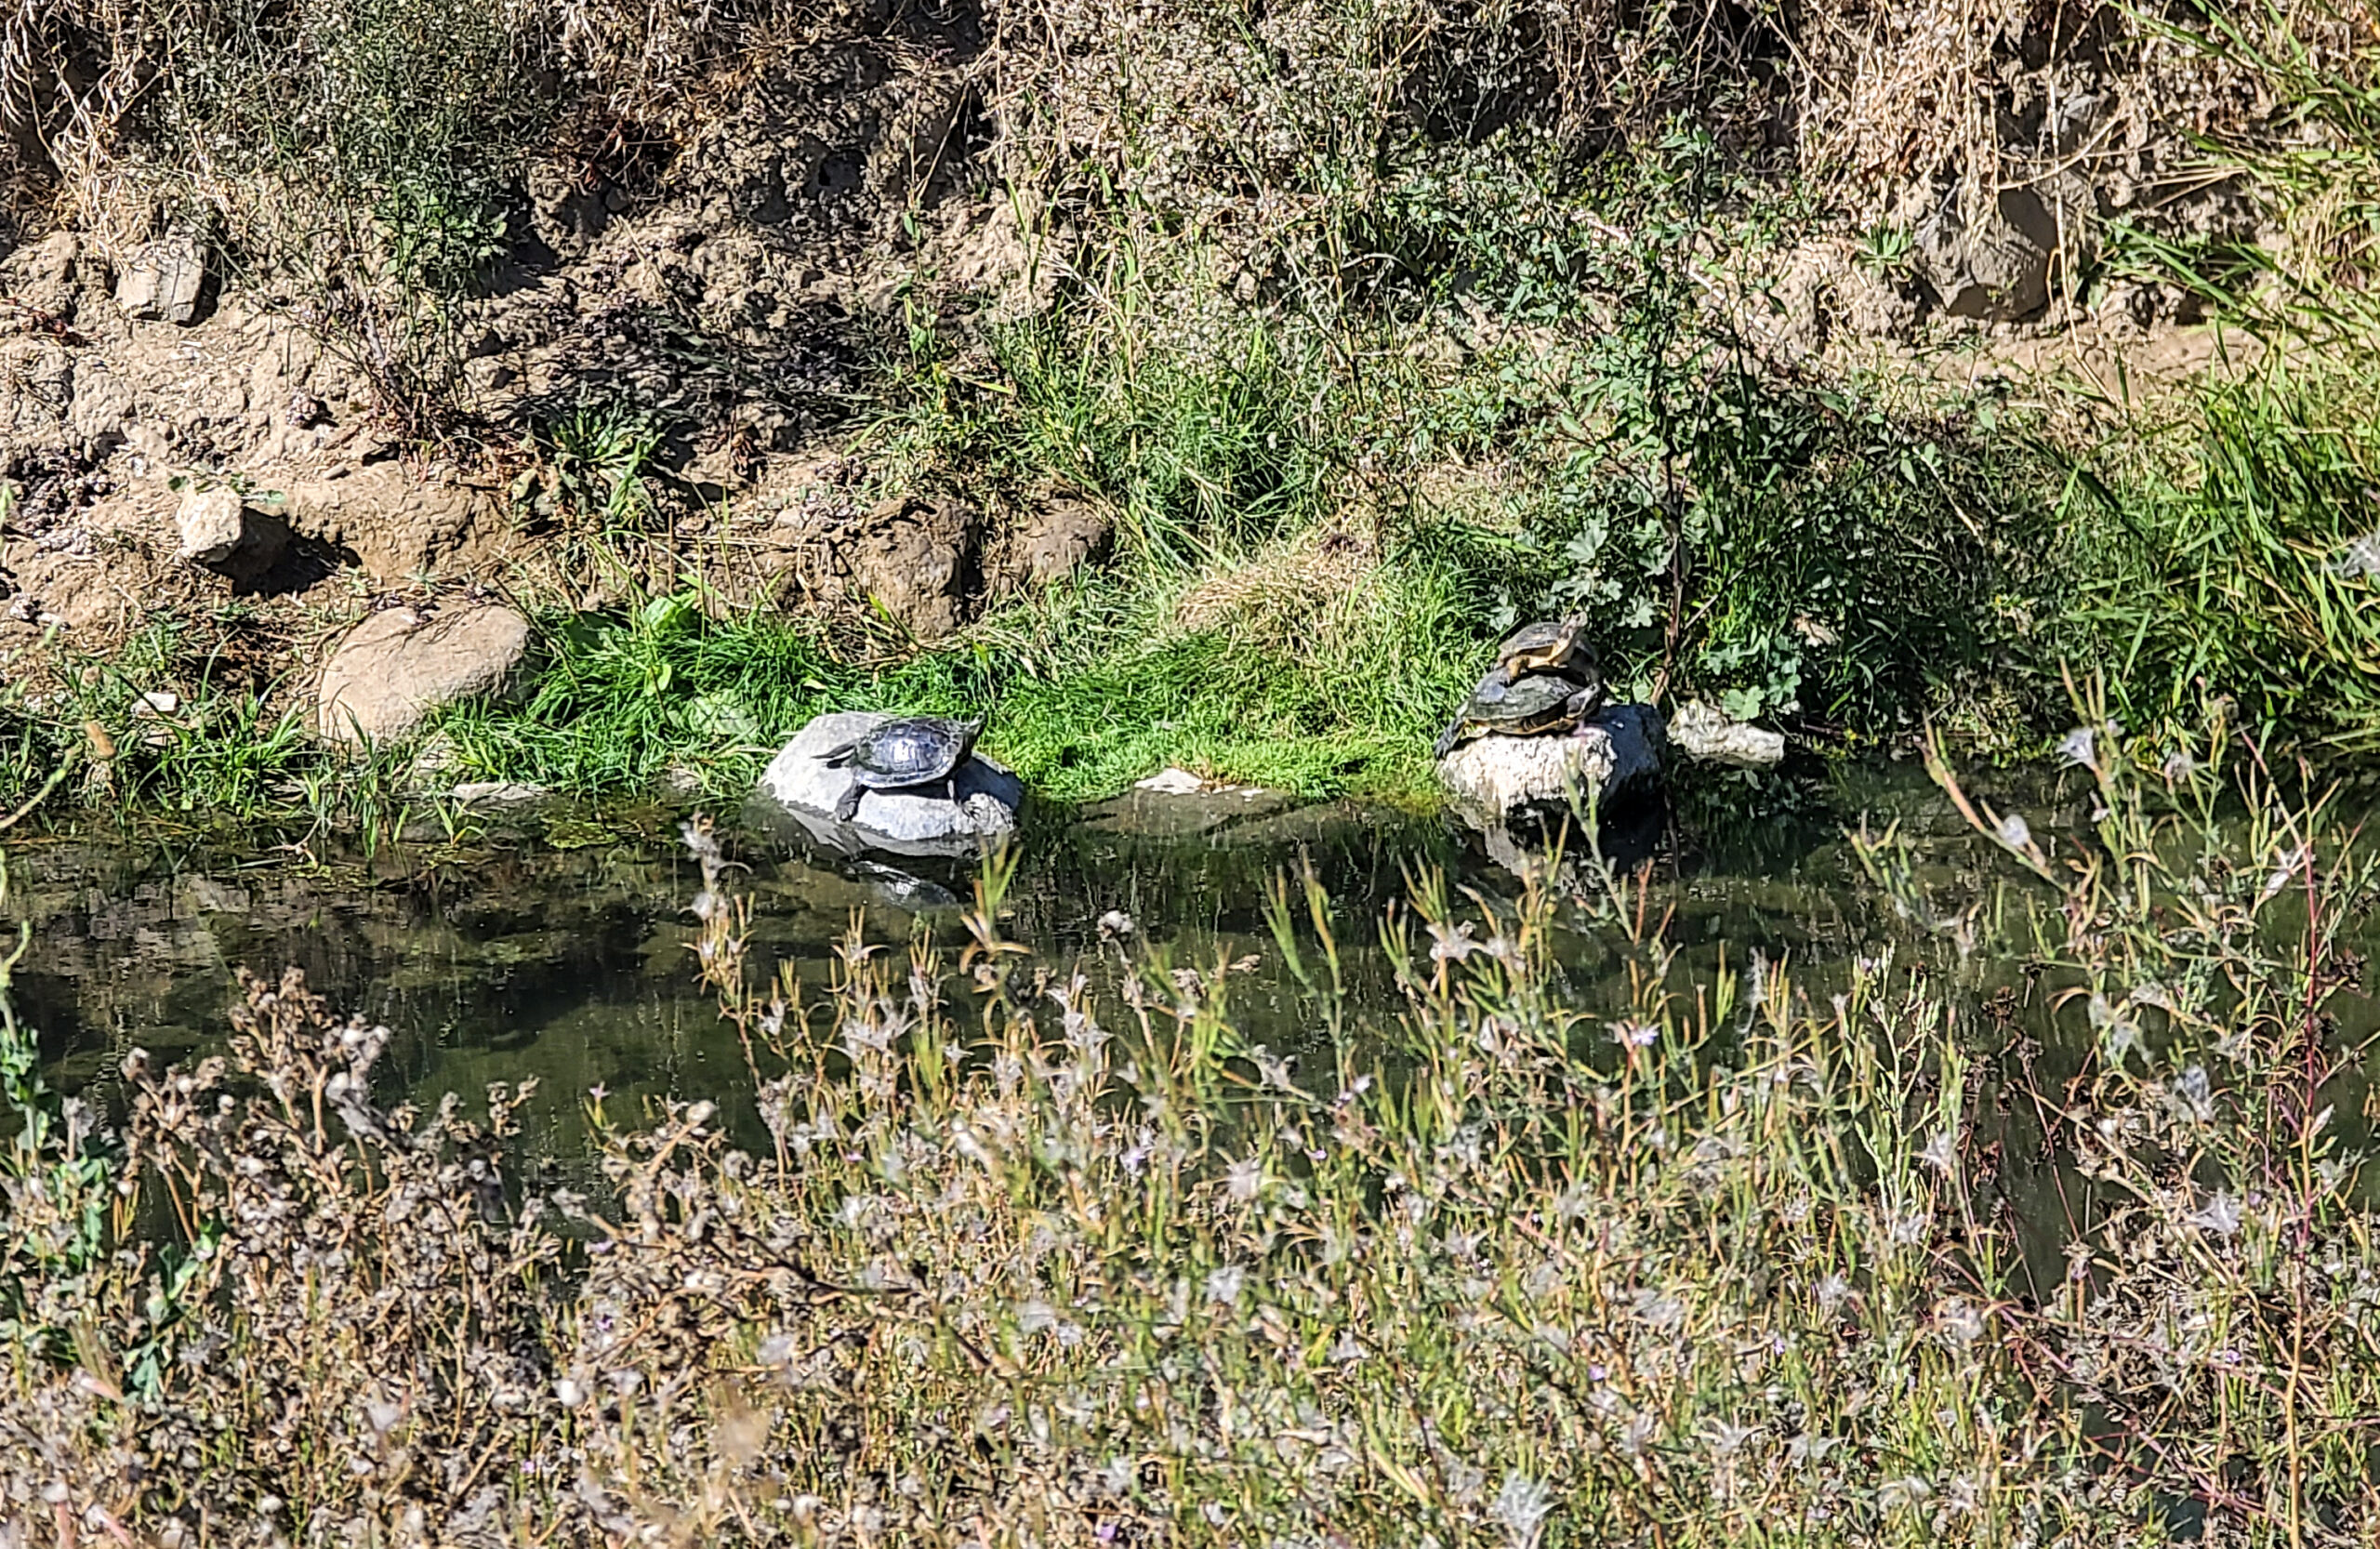 Turtles basking in the sun along the creek on rocks